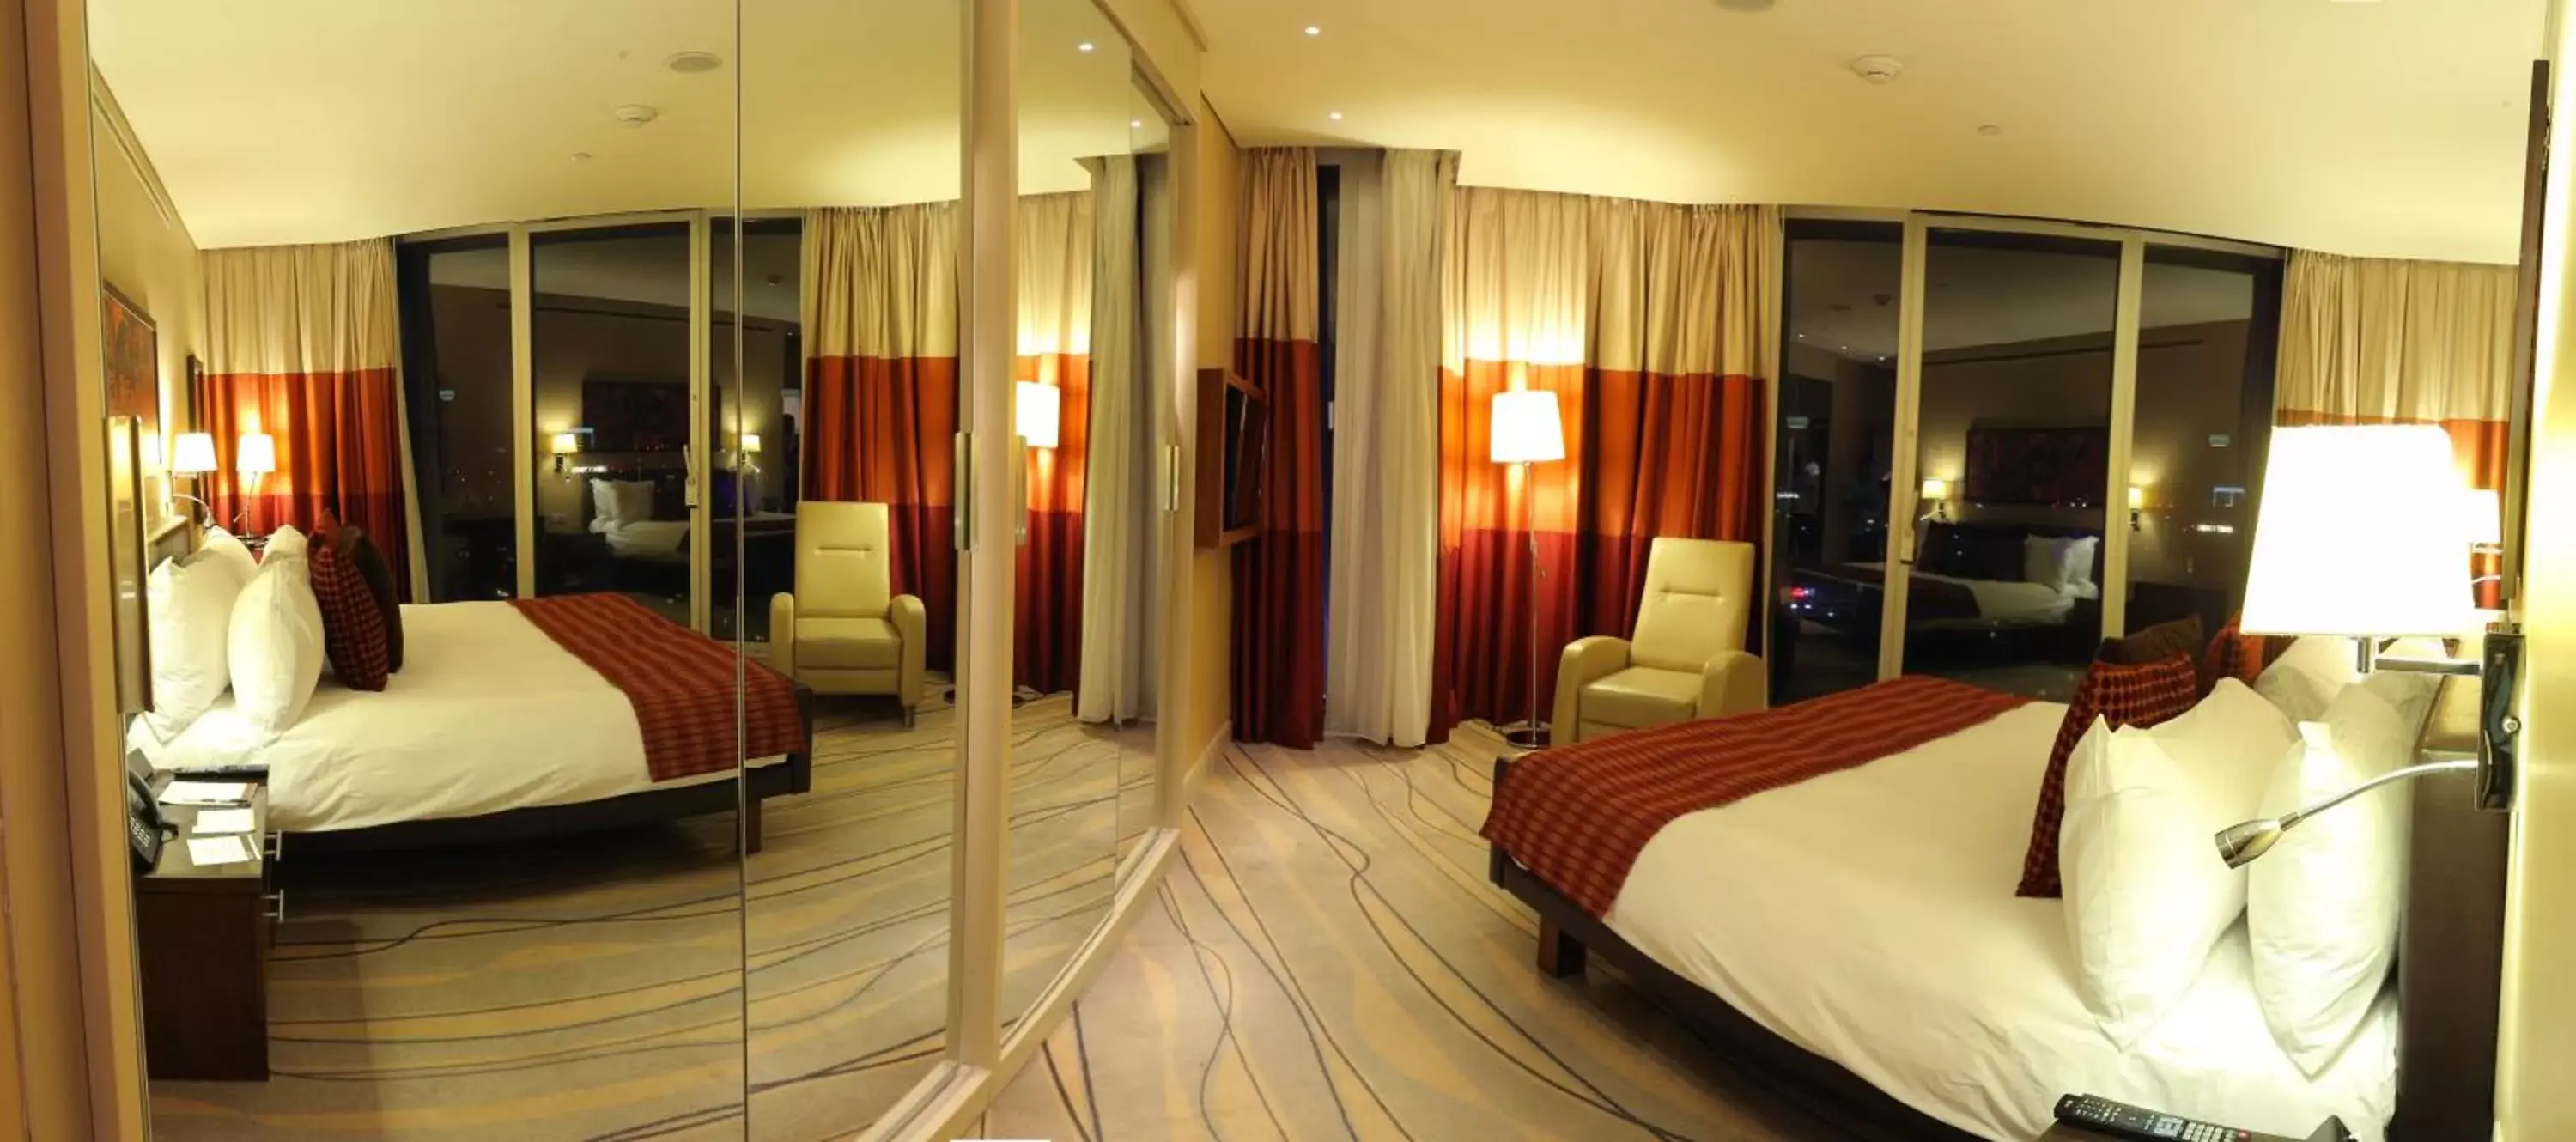 Bedroom, Room Photo in Staybridge Suites Hotel, an IHG Hotel